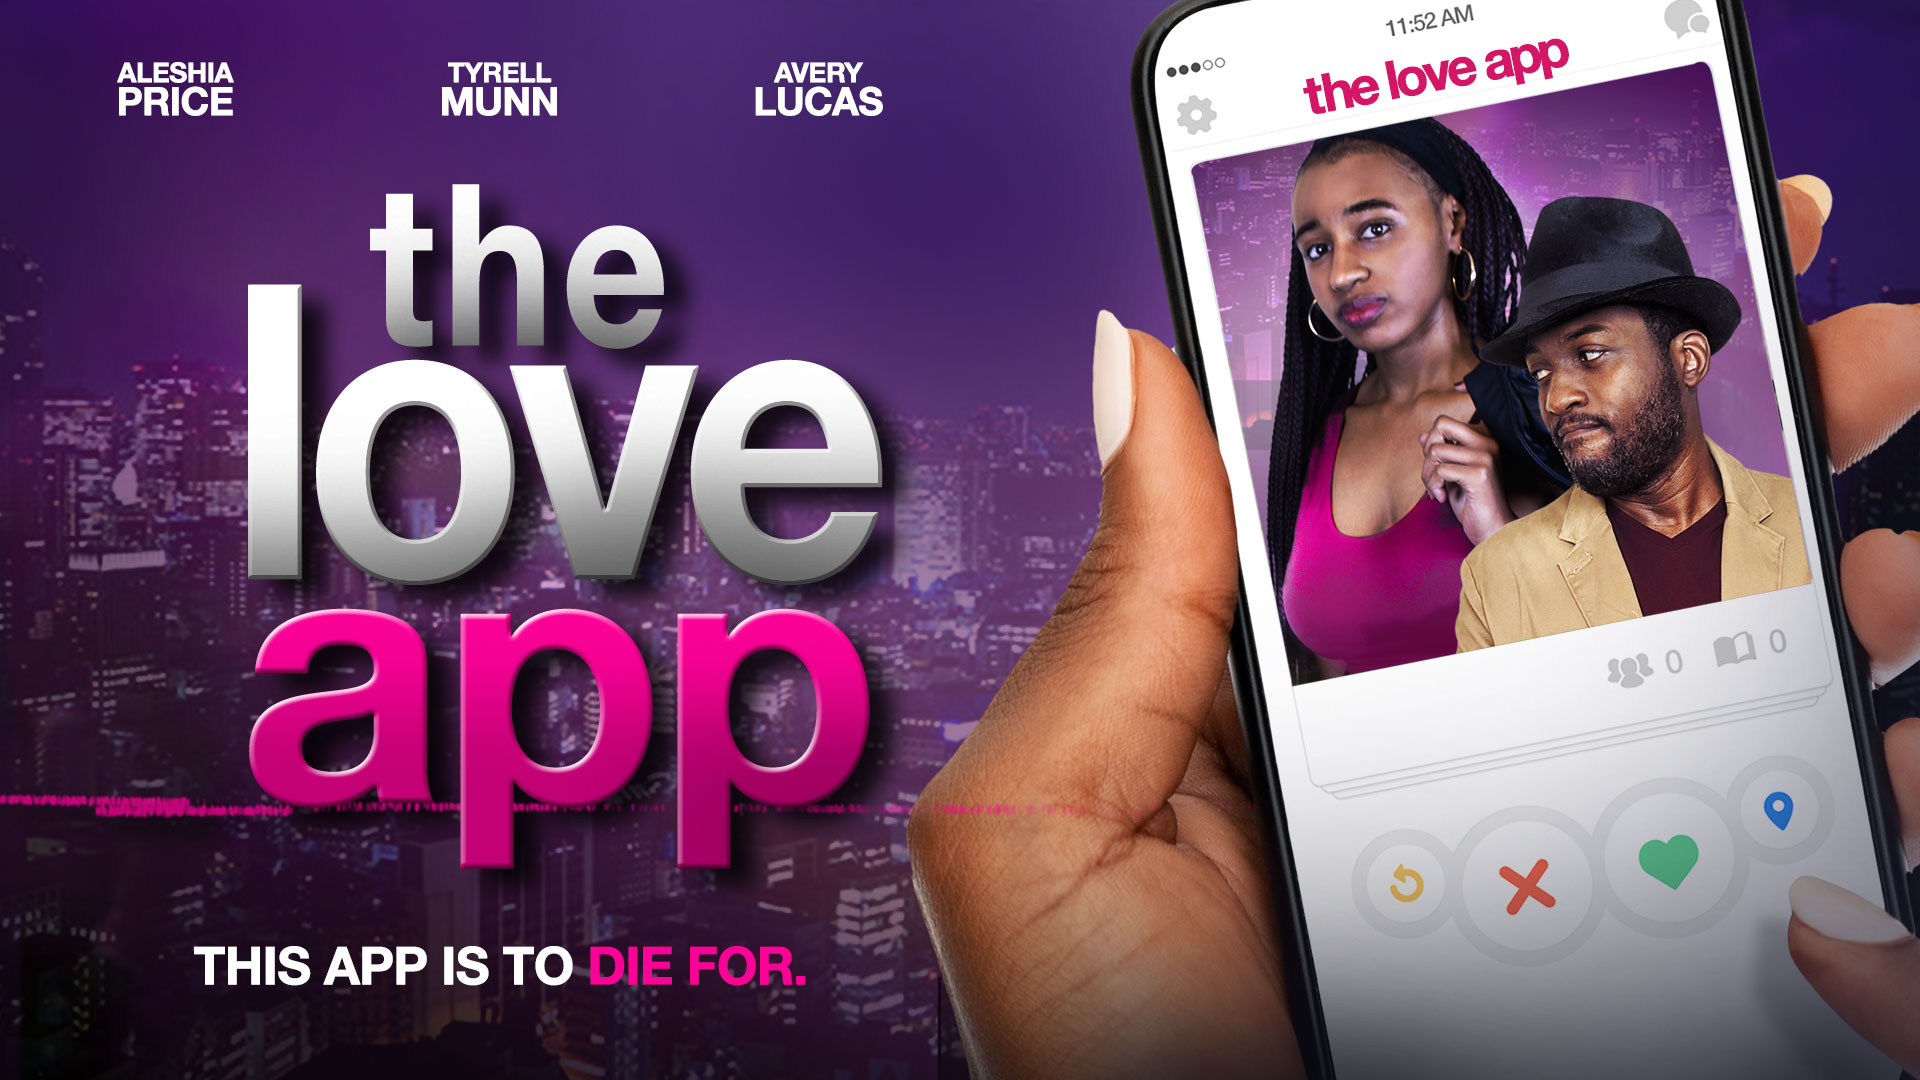 The Love App